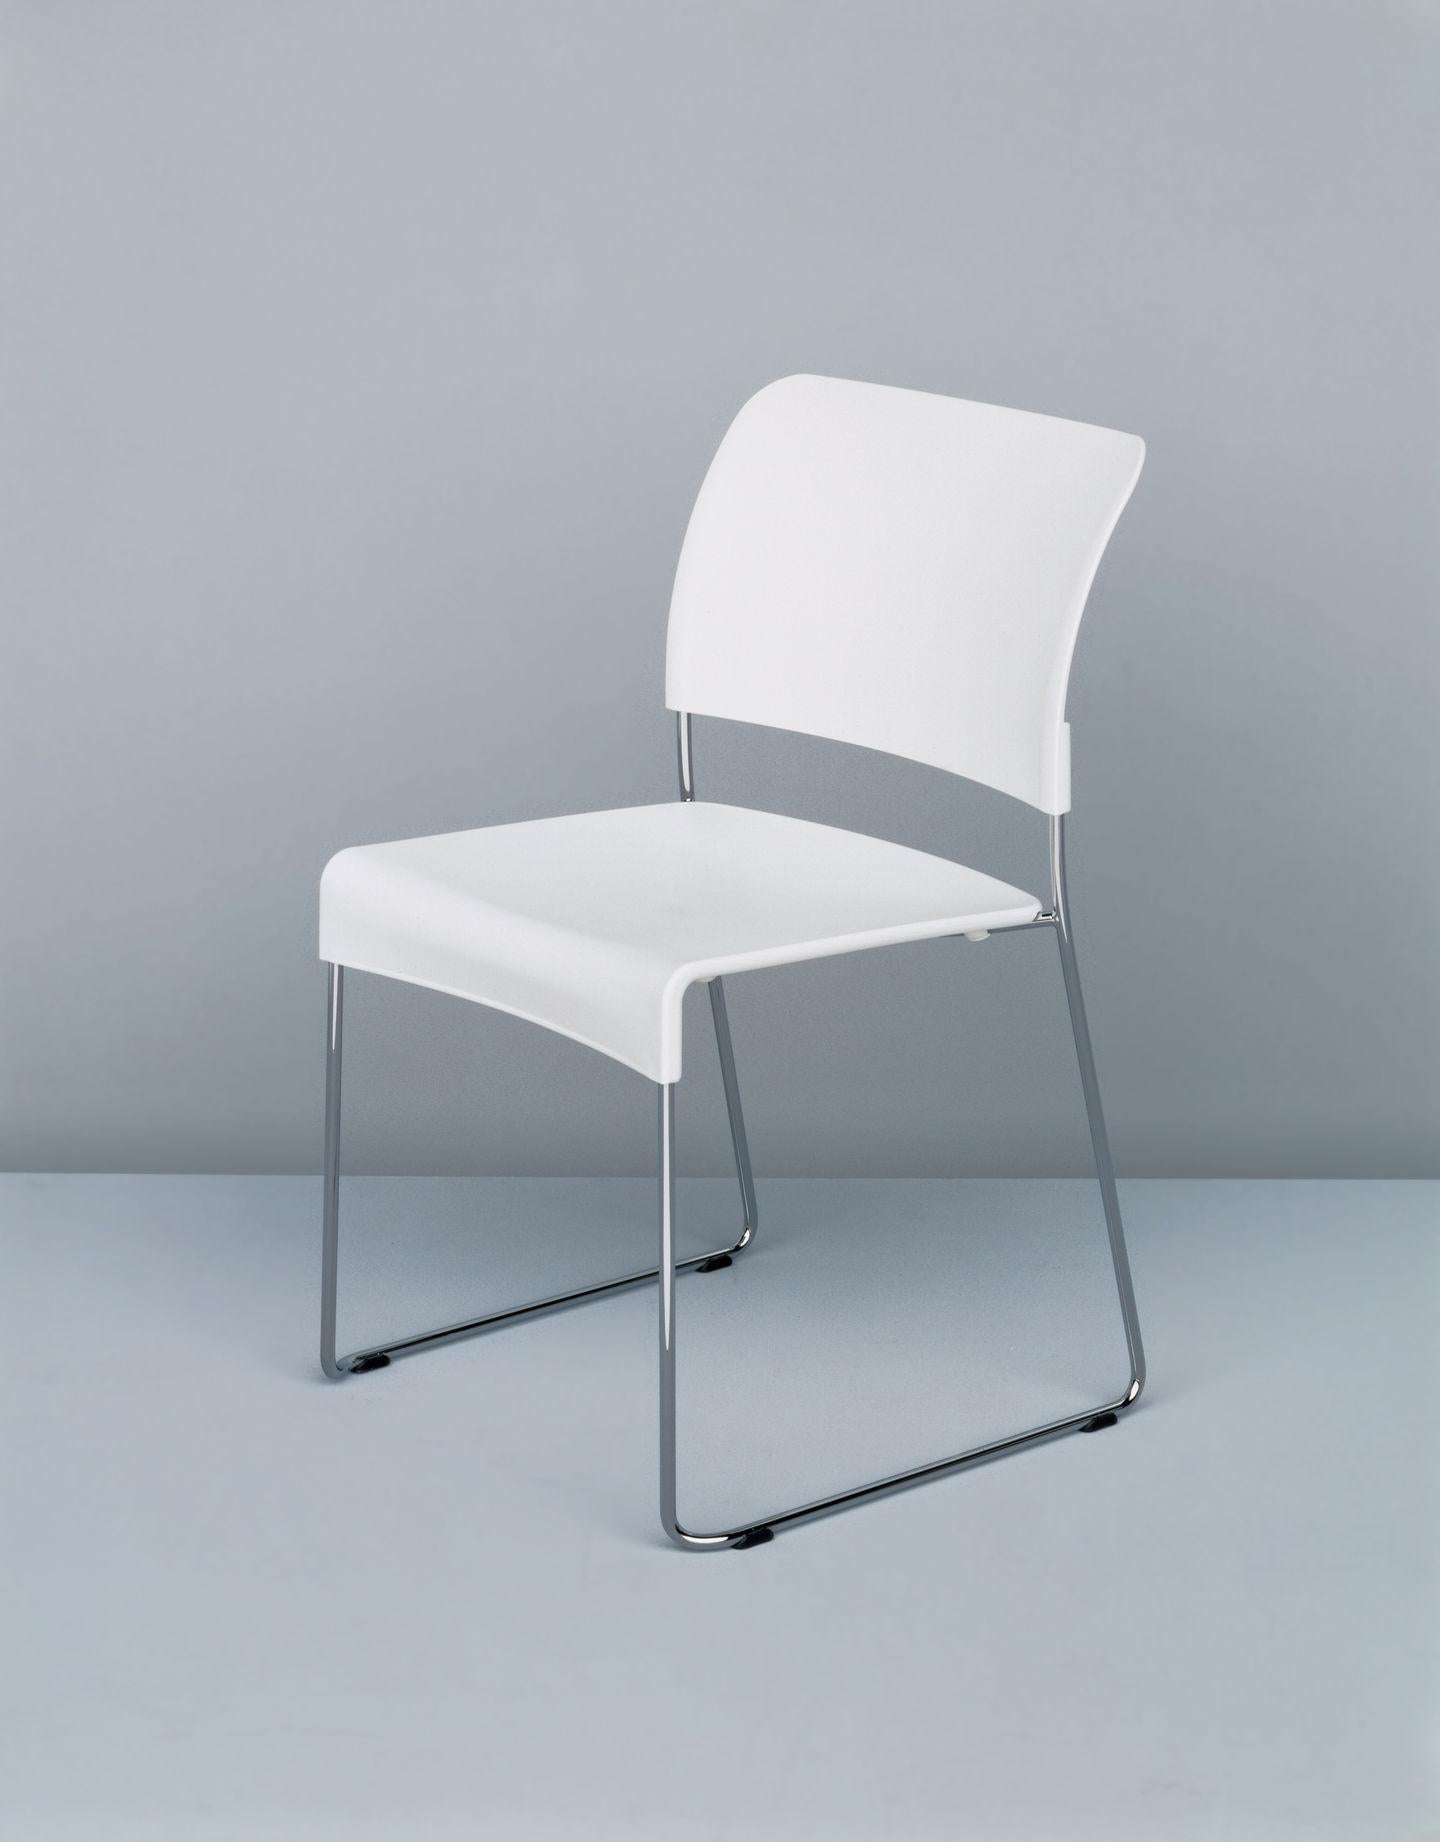 Swiss Set of Four Jasper Morrison Sim Chairs by Vitra